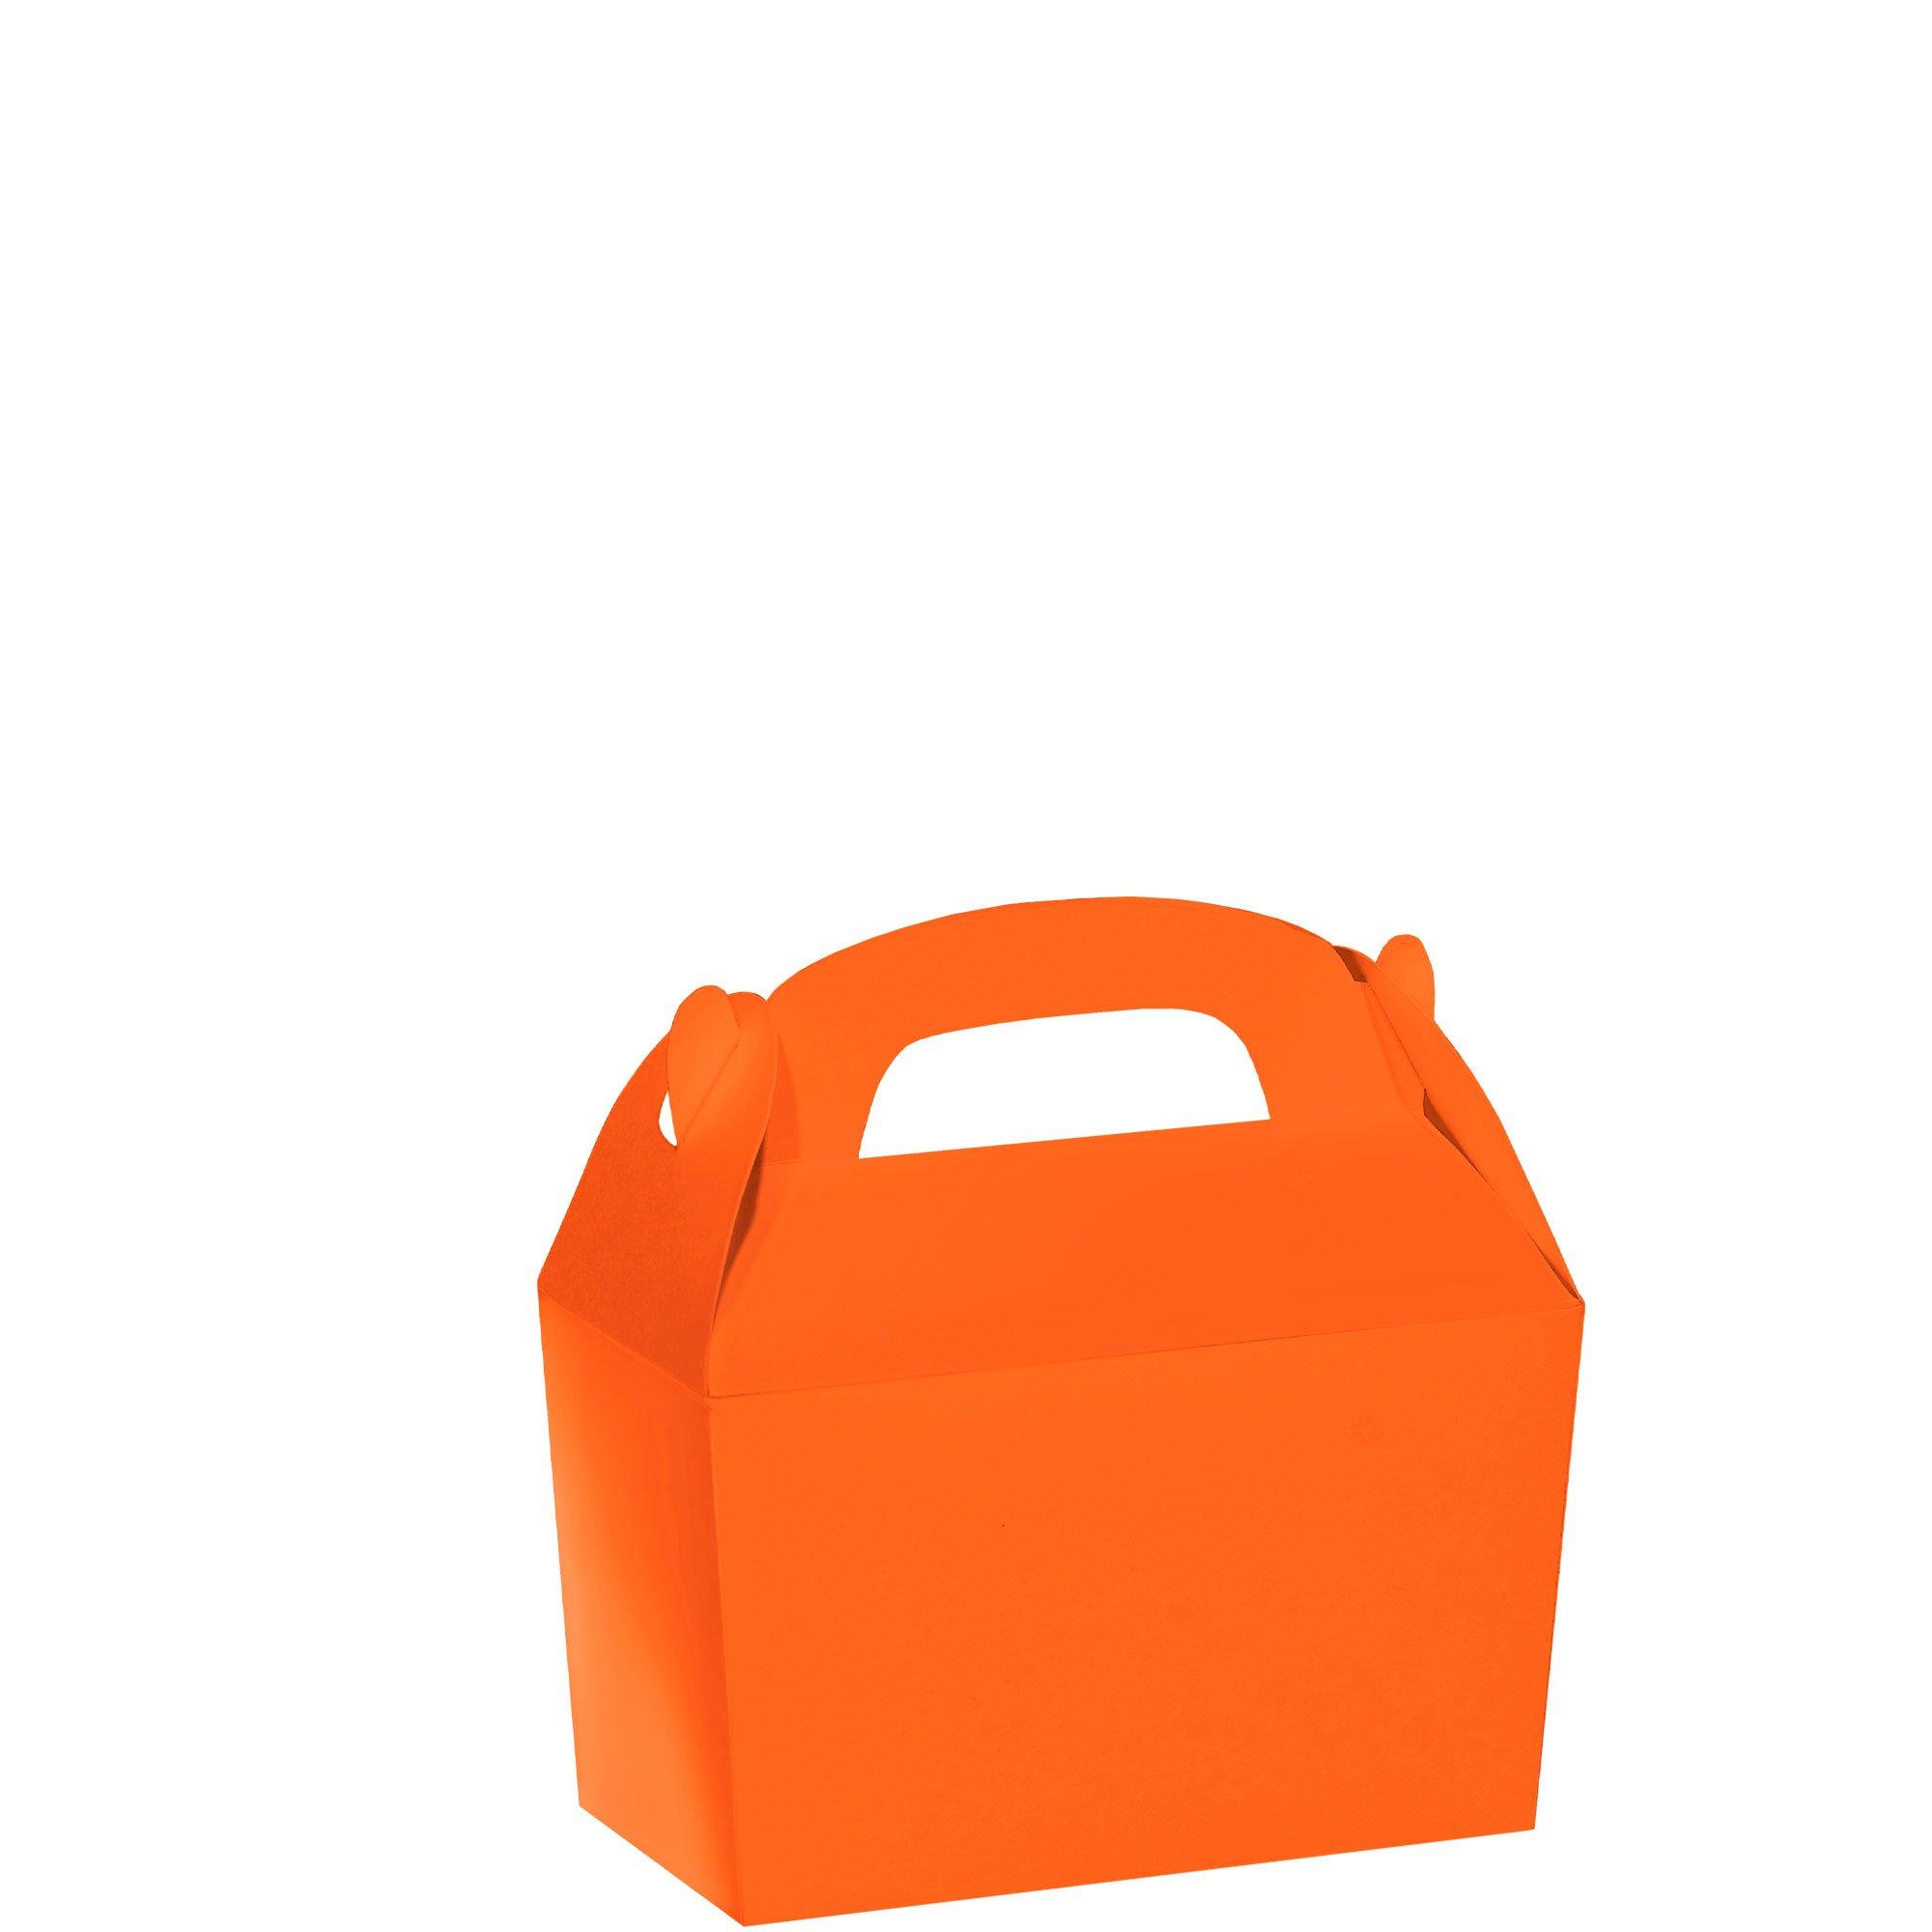 The resourceful orange box